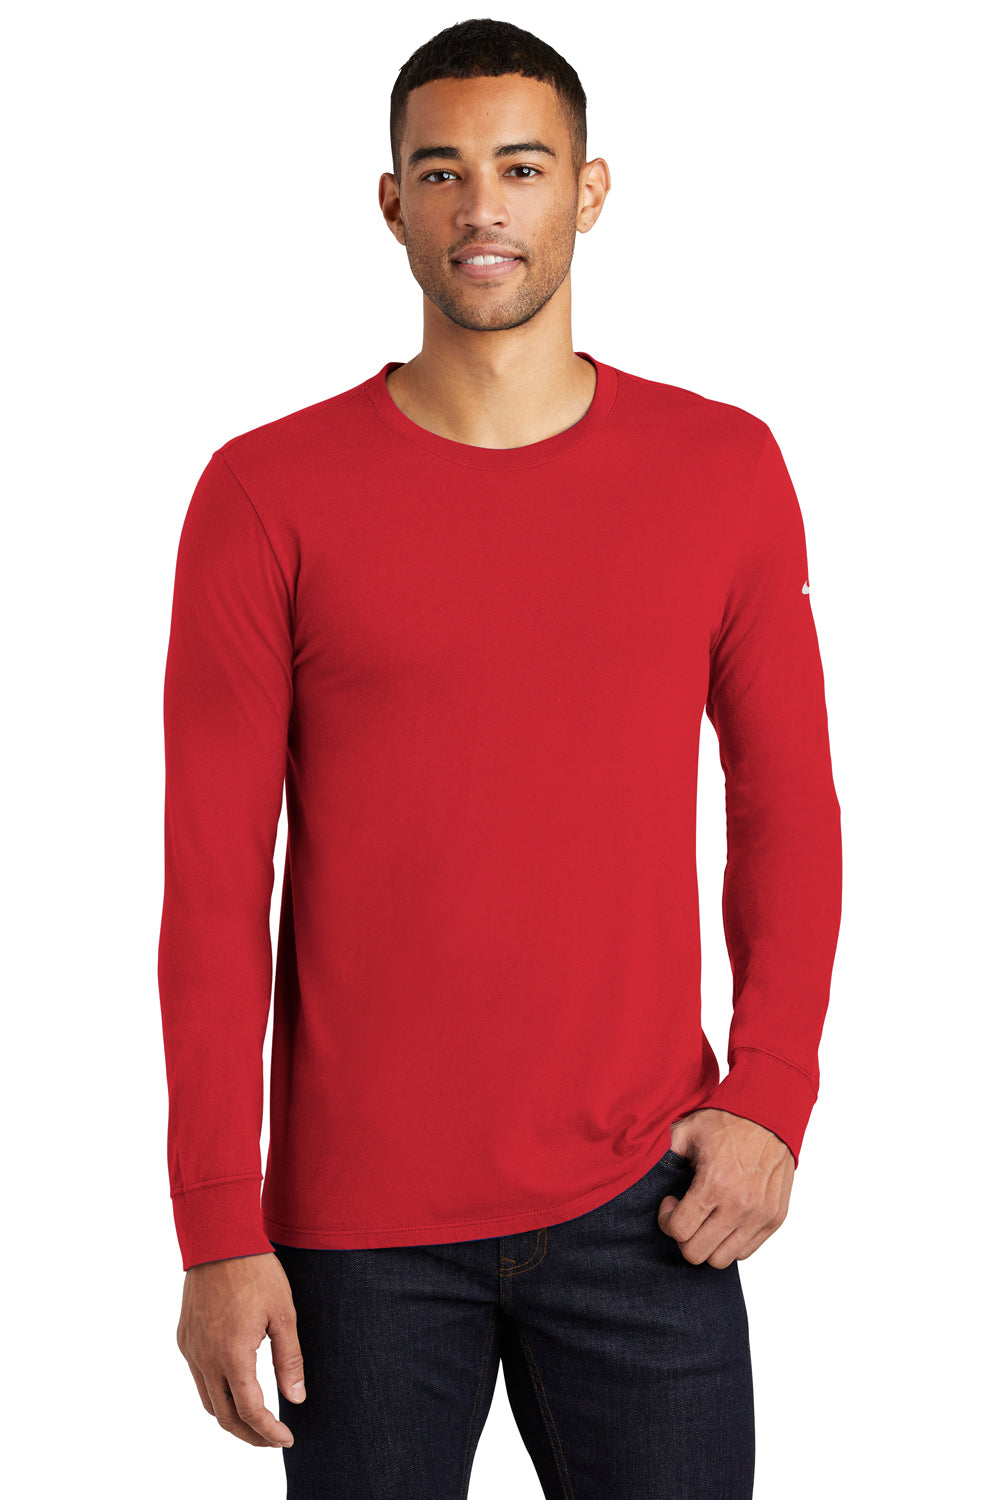 Nike Mens Core Long Sleeve Crewneck T-Shirt - University Red (DISCONTINUED)